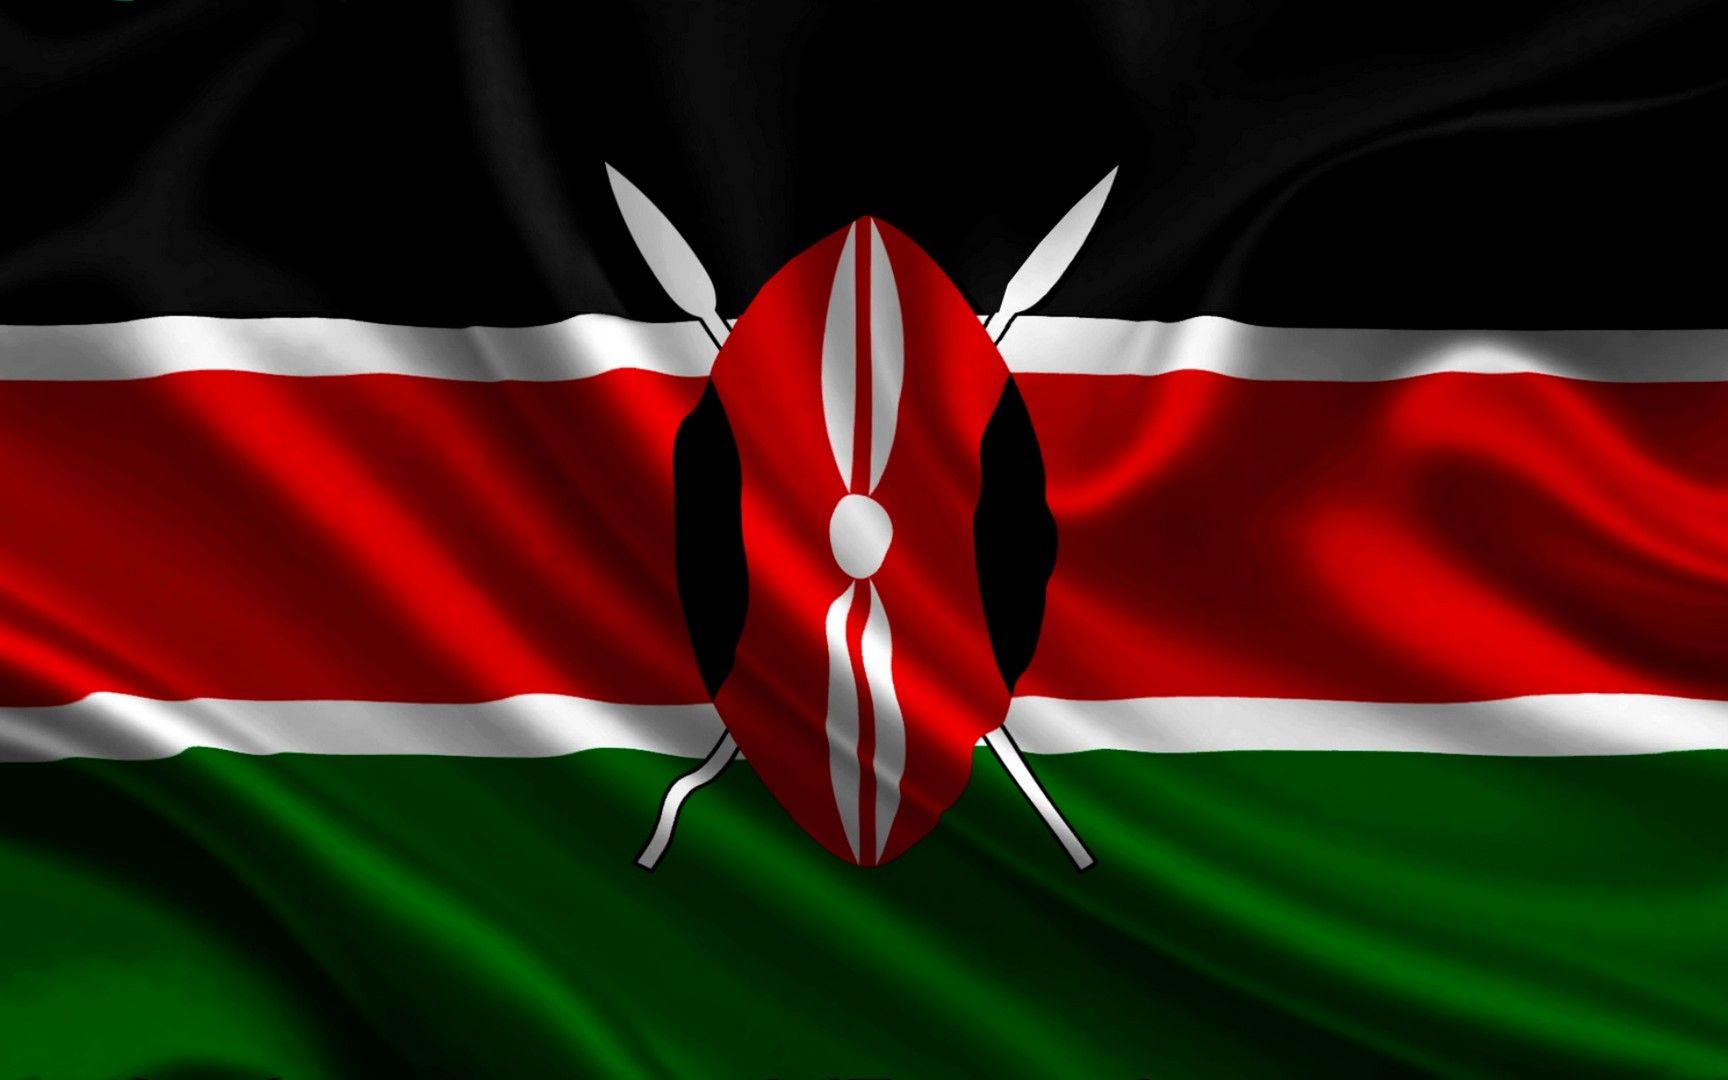 Flag of Kenya wallpaper Flags wallpaper Kenya flag Flag Kenya